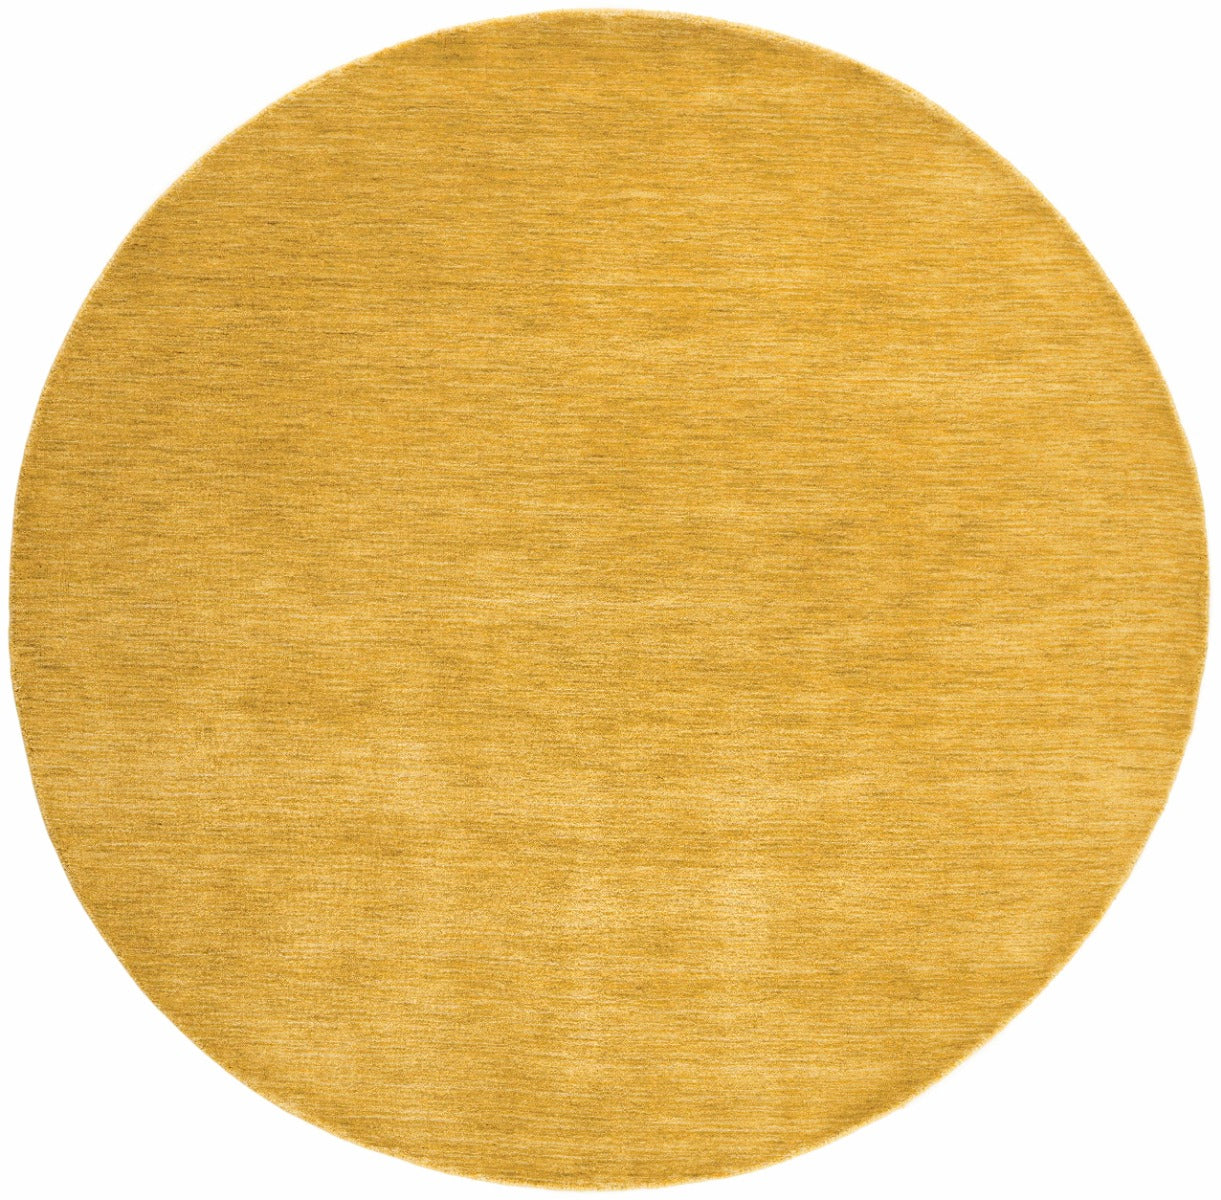 plain yellow wool circle rug